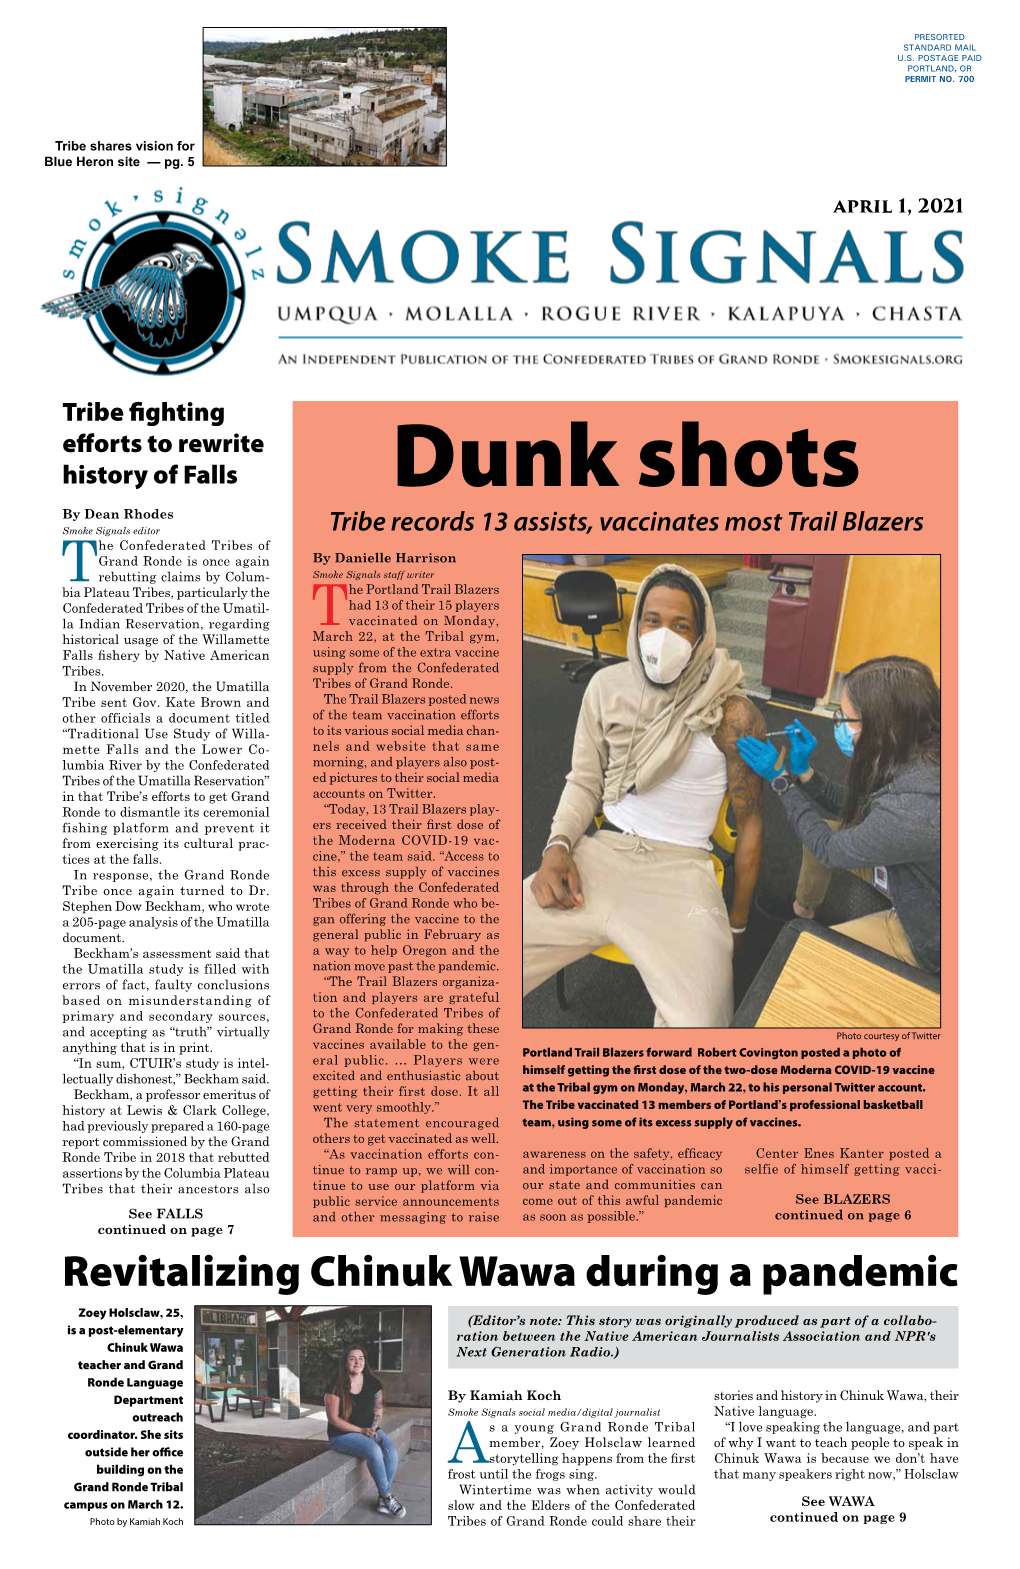 Revitalizing Chinuk Wawa During a Pandemic